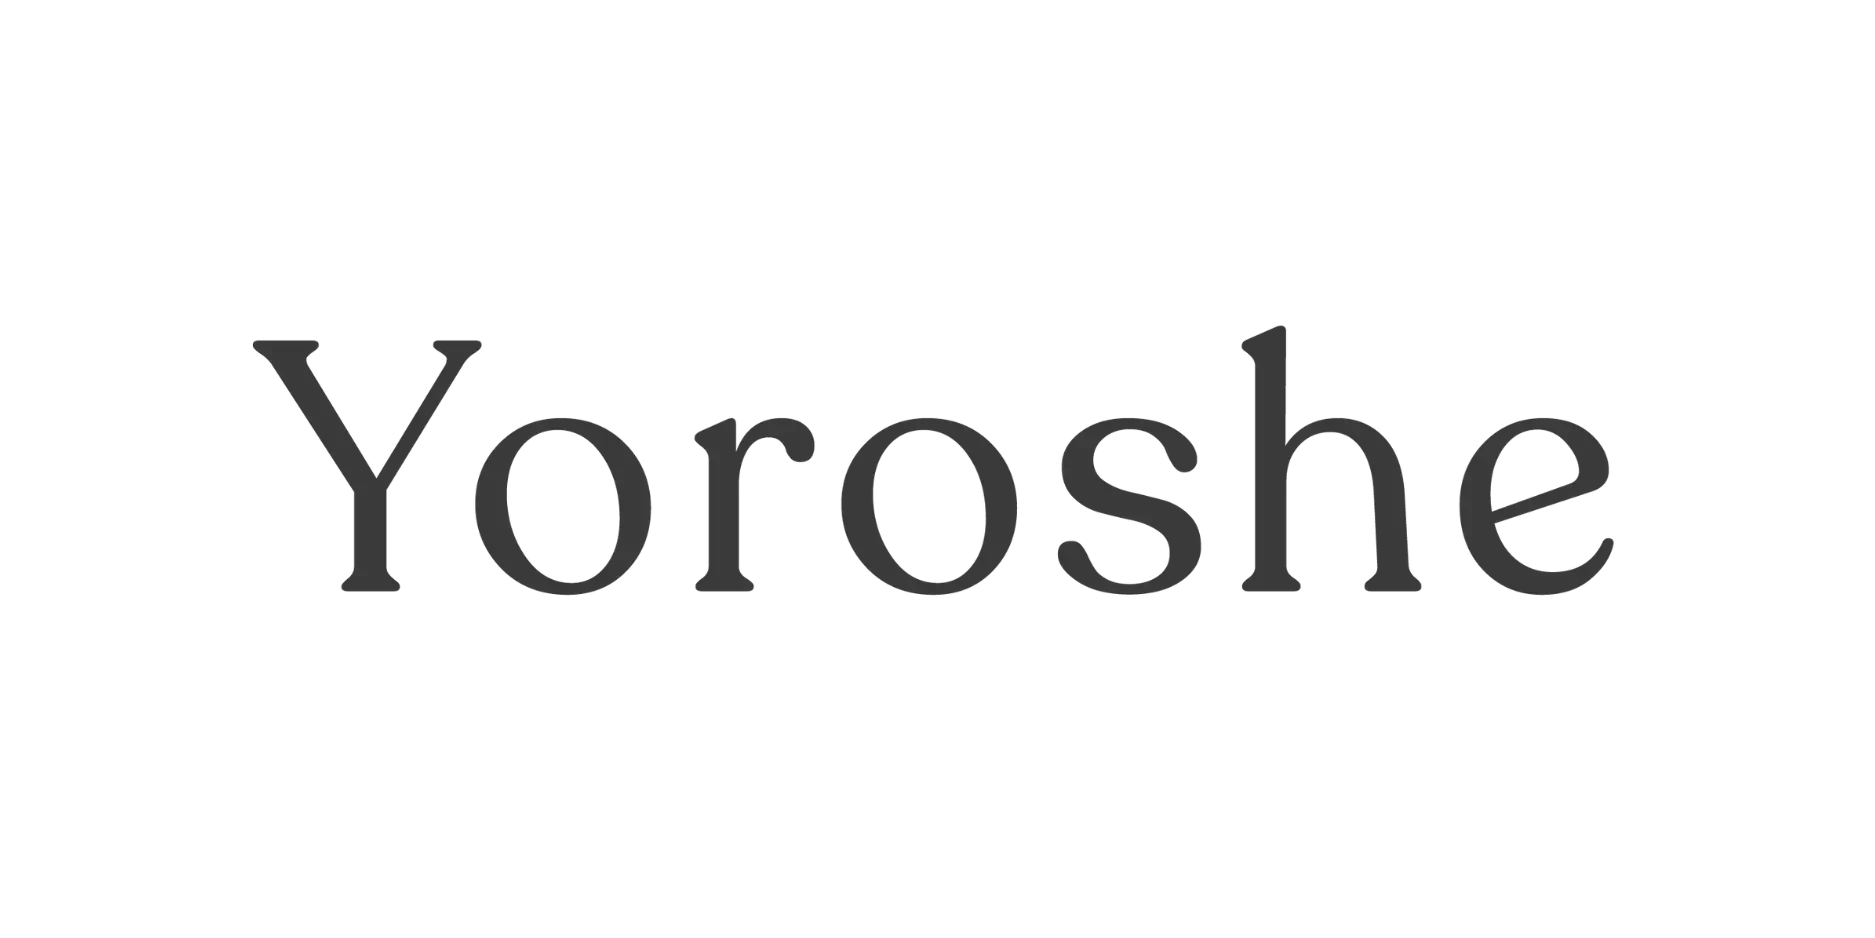 Yoroshe